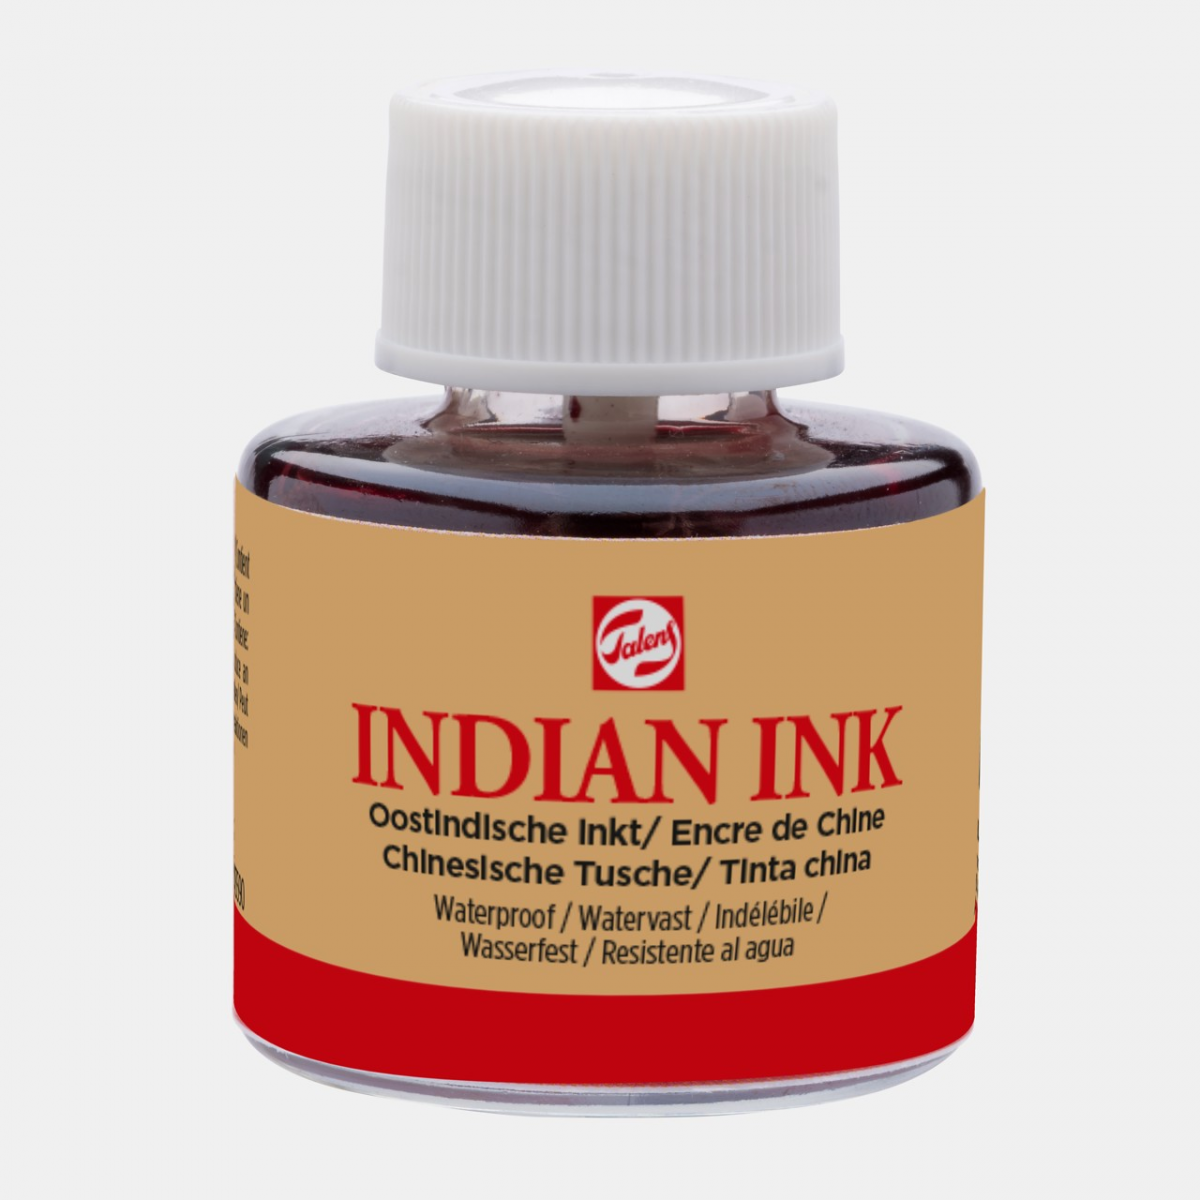 TINTA CHINA "INDIAN INK" 11...